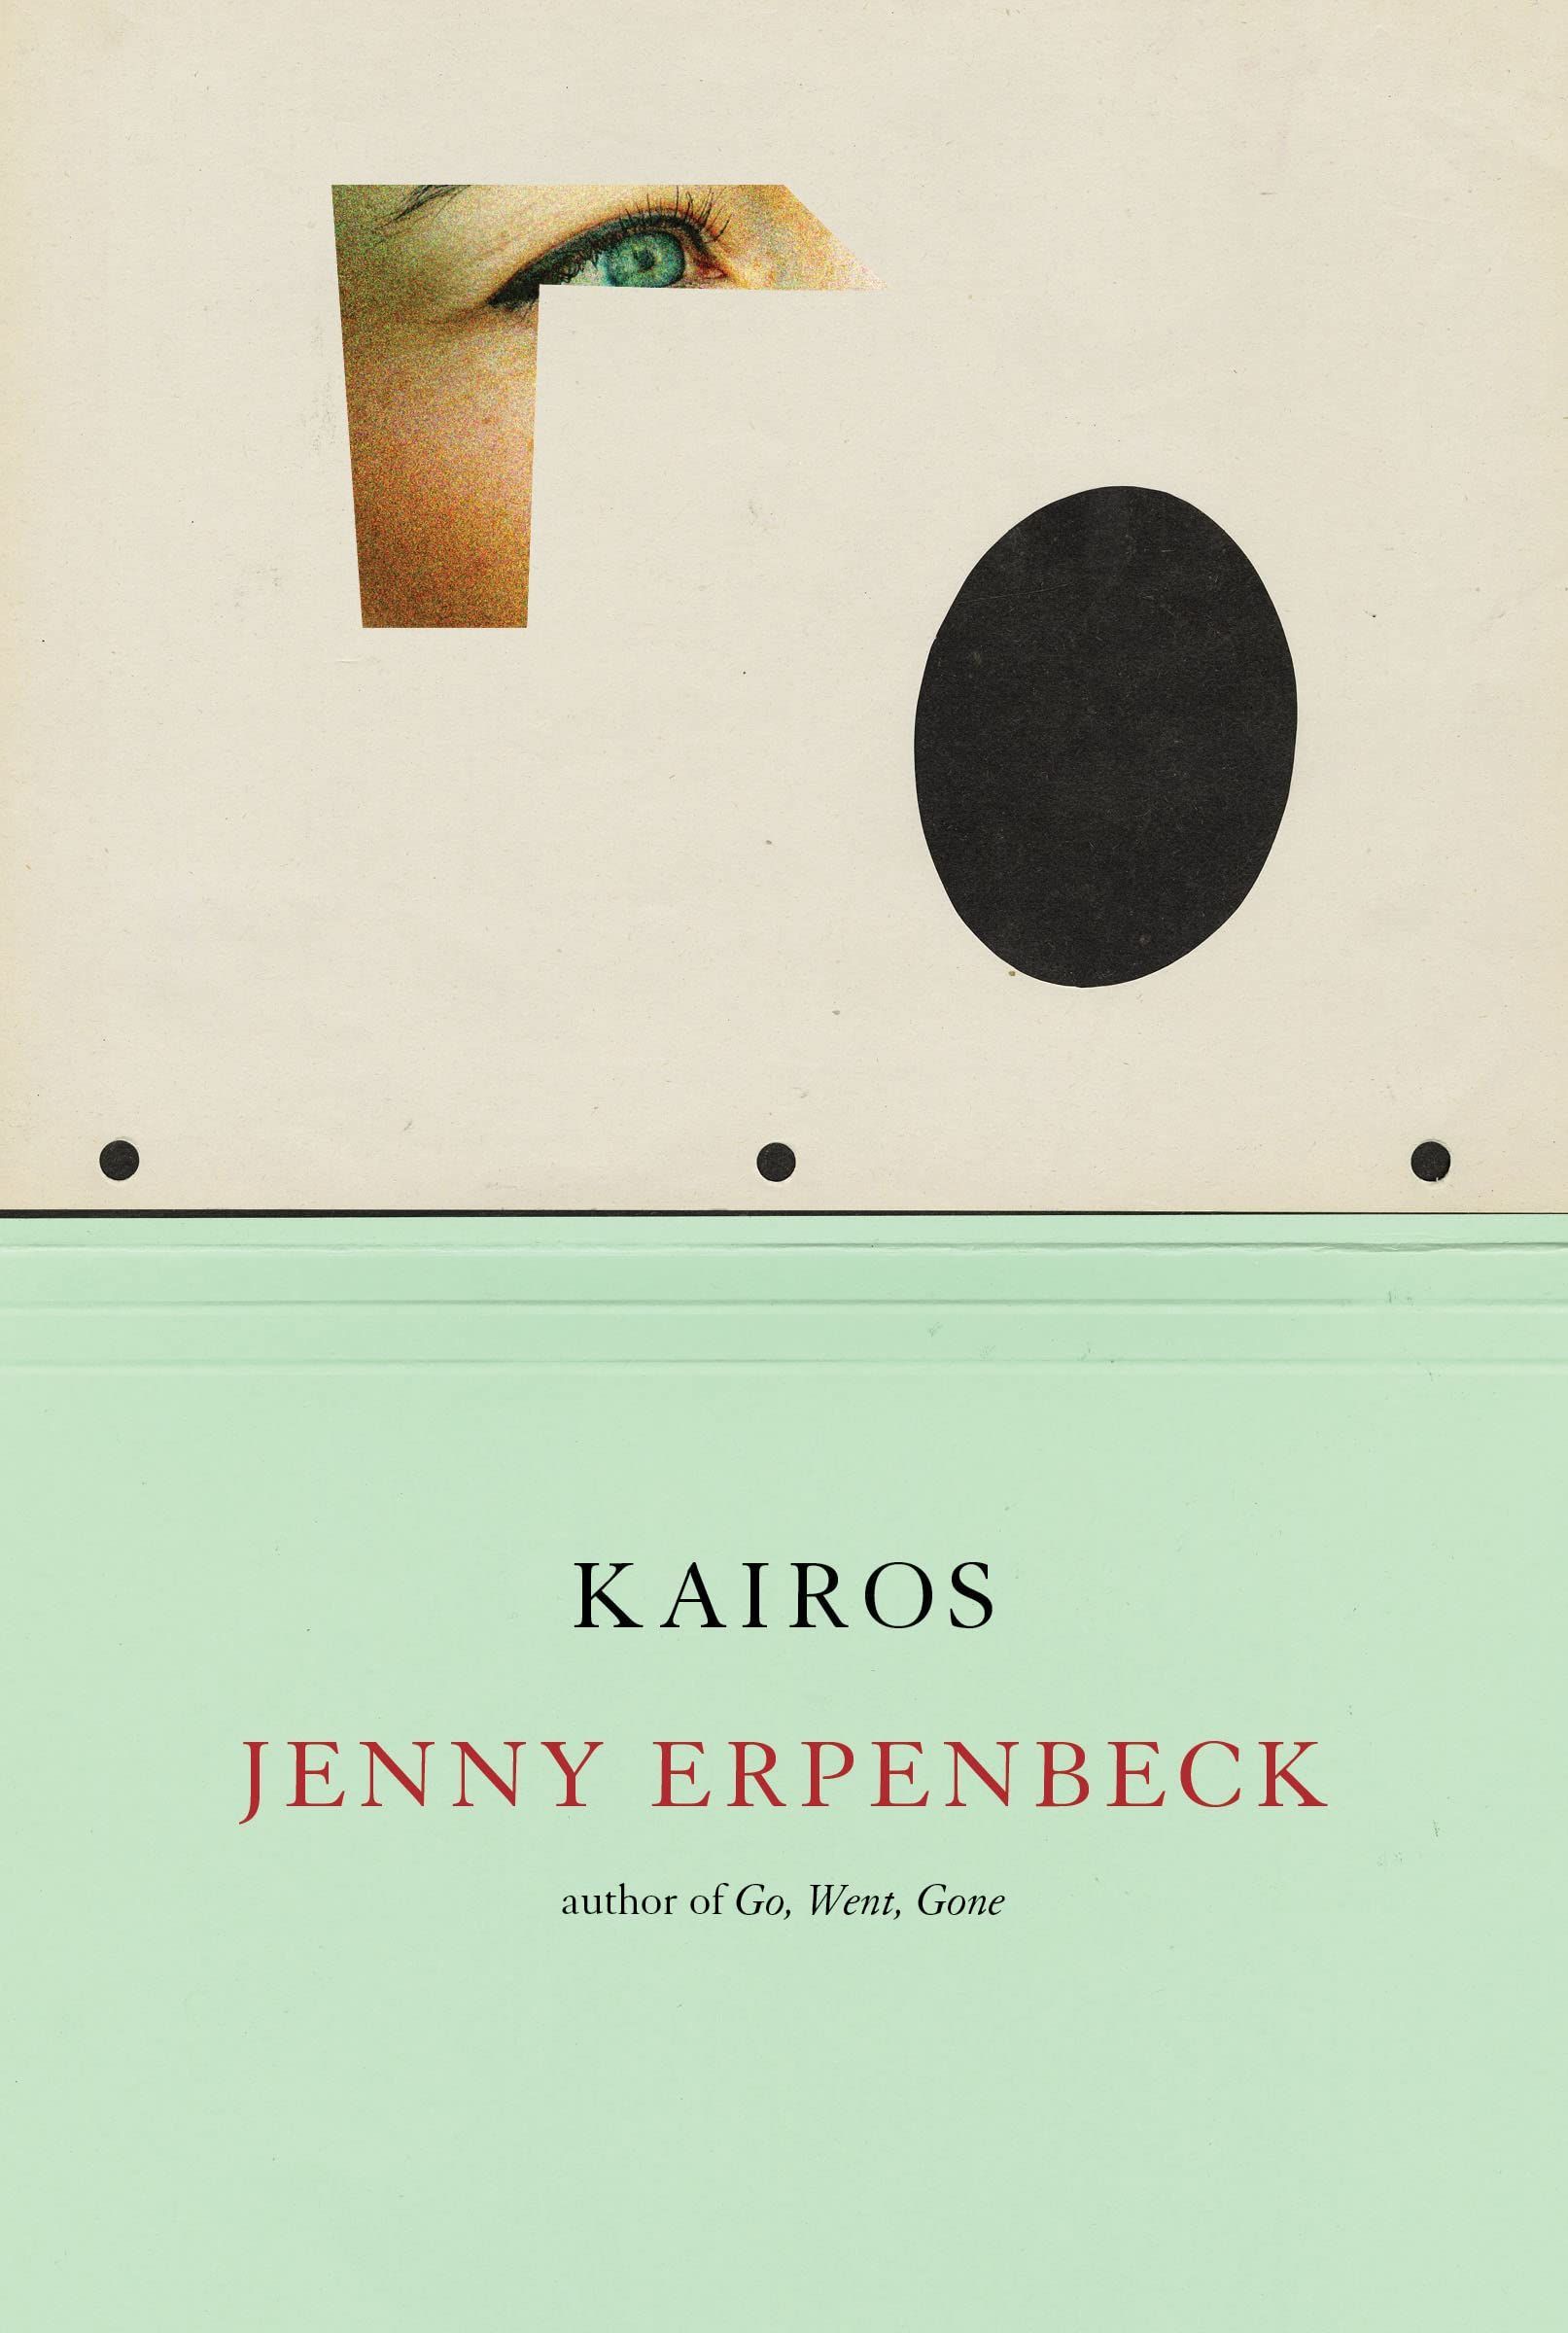 The Turbulence of History: On Jenny Erpenbeck’s “Kairos”